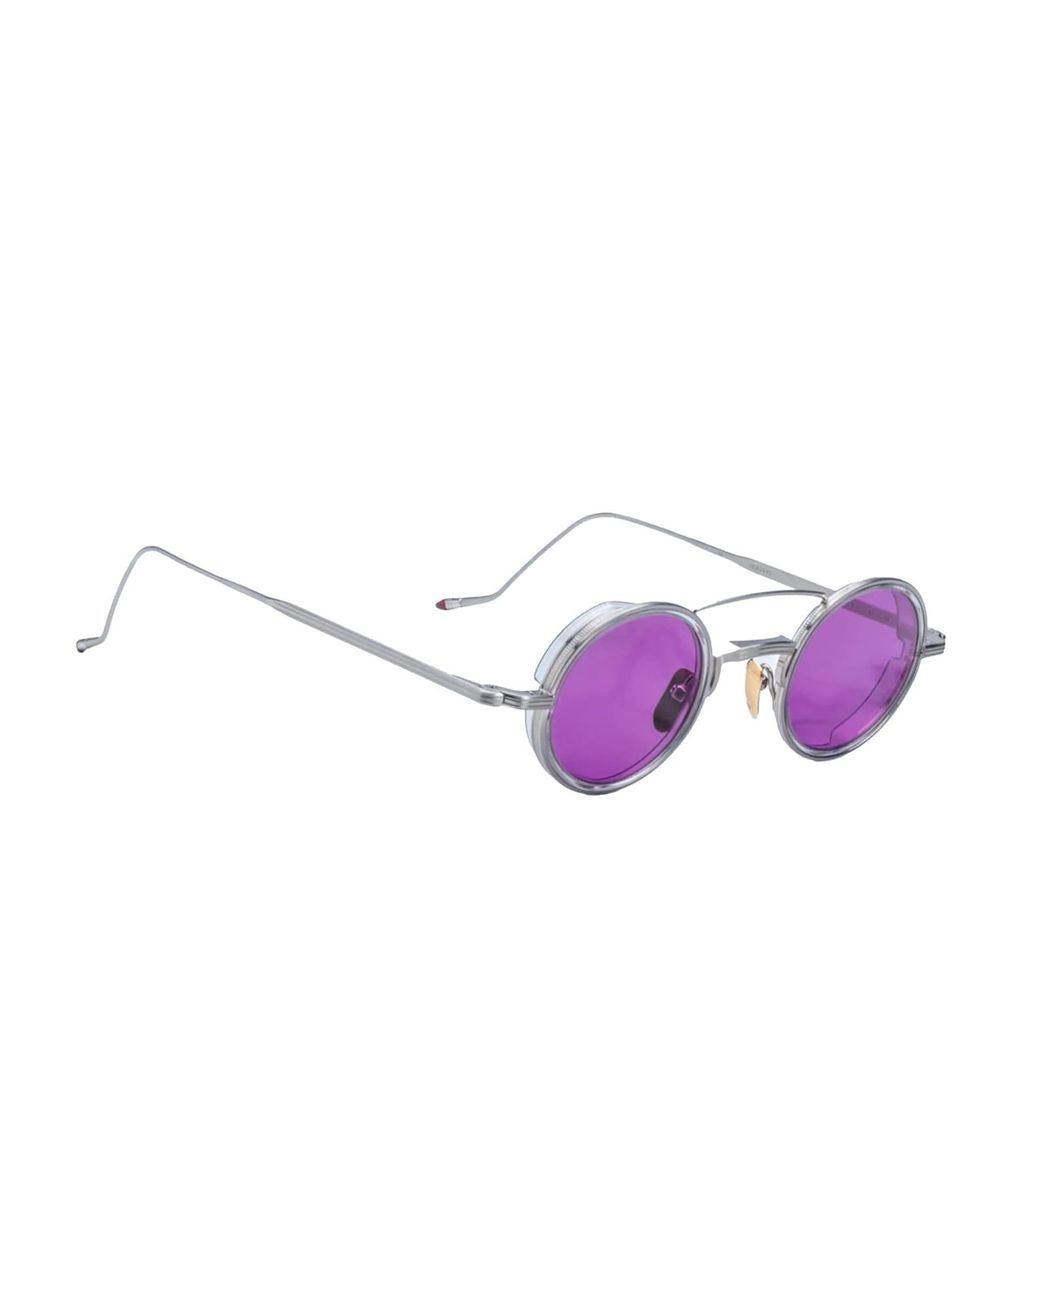 The Ringo Square Sunglasses